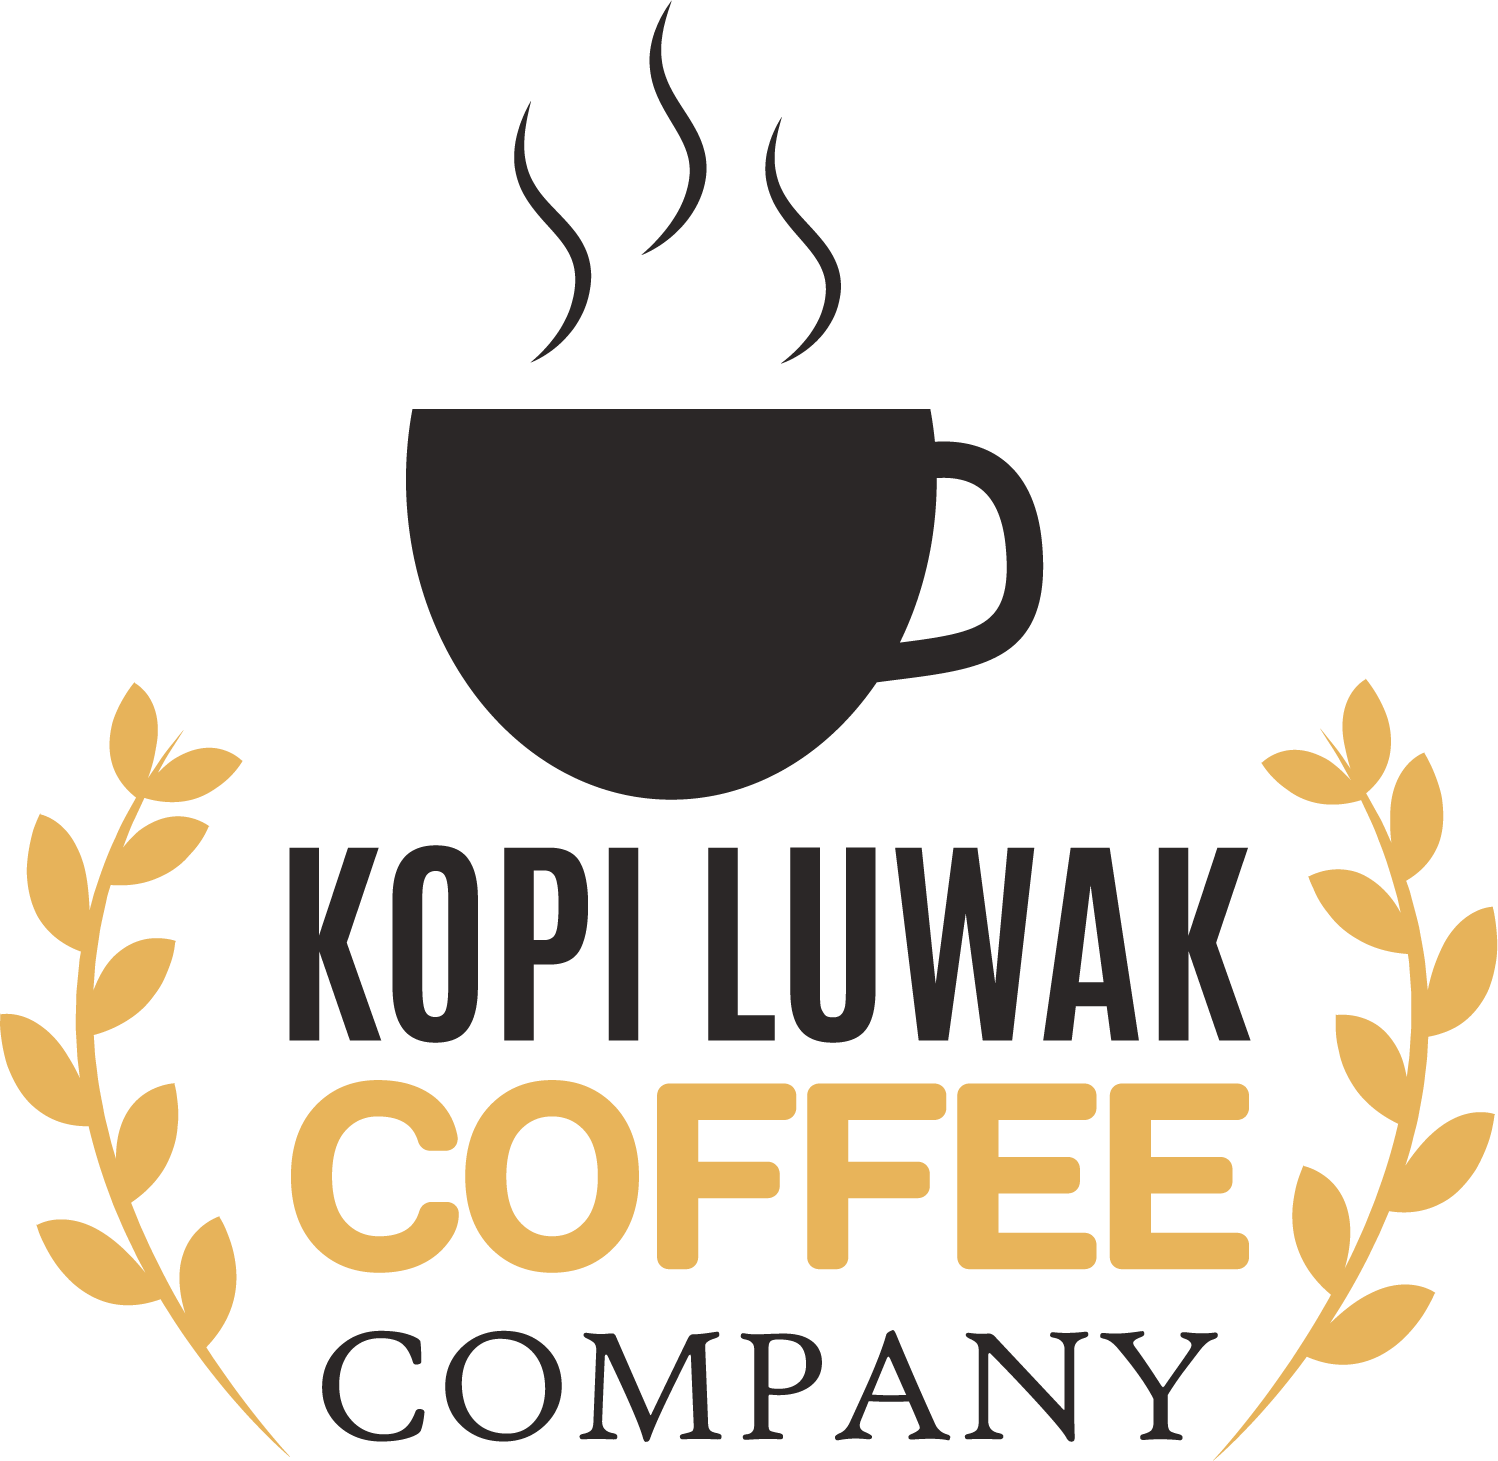 Kopi Luwak Coffee Company